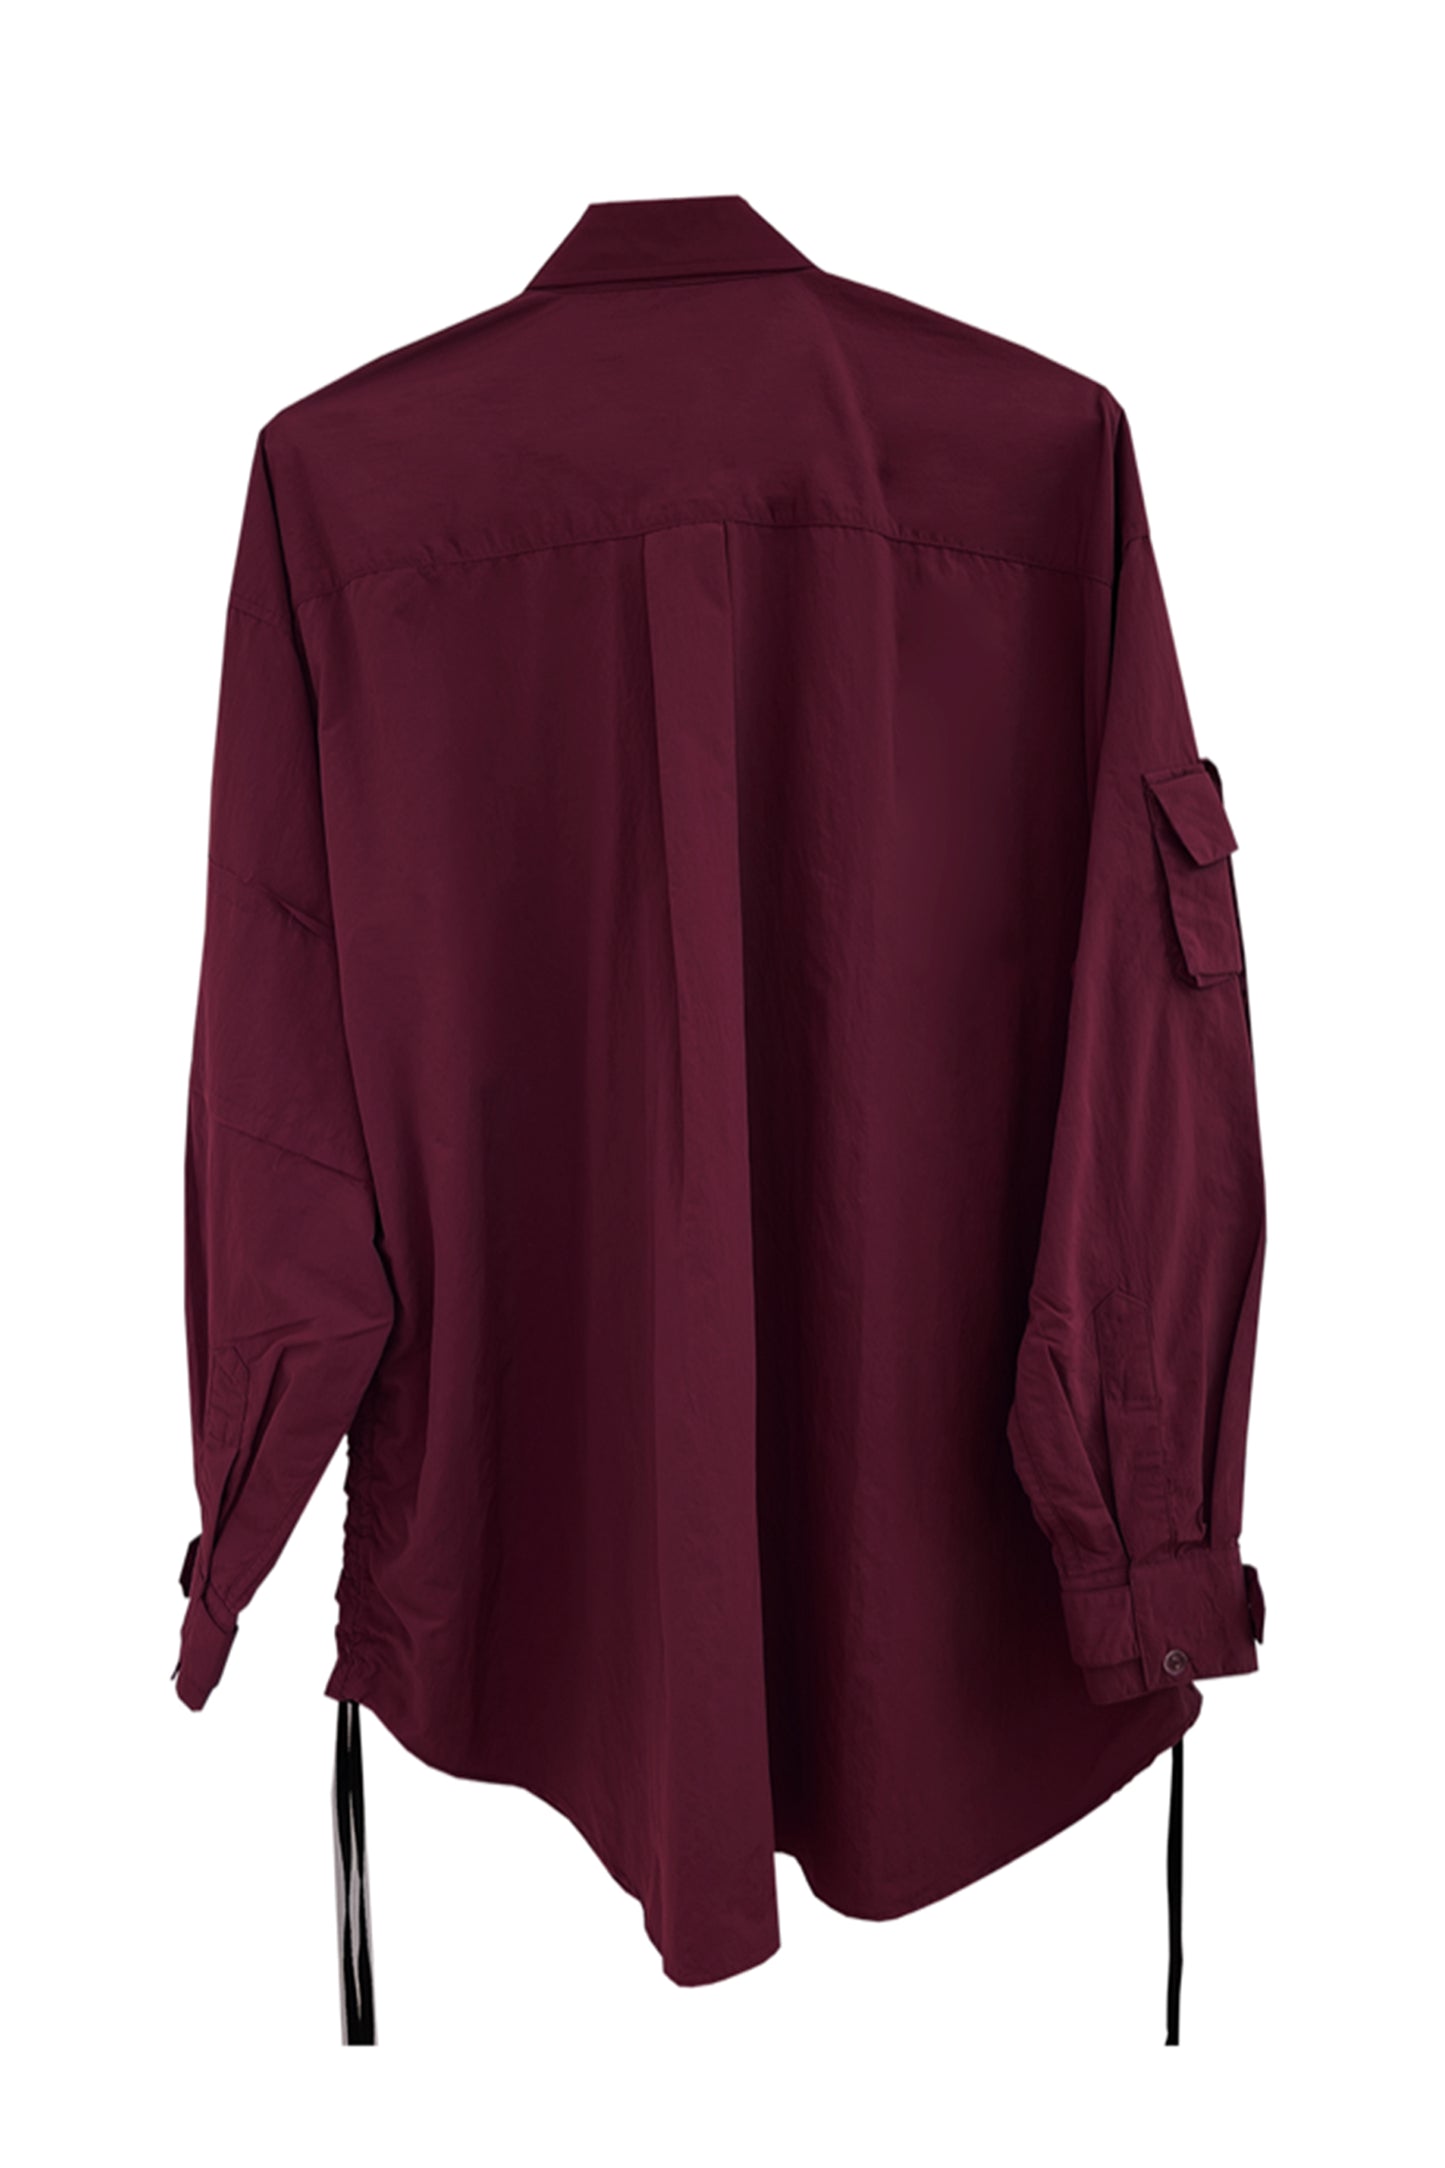 Burgundy Shirt - Oversized